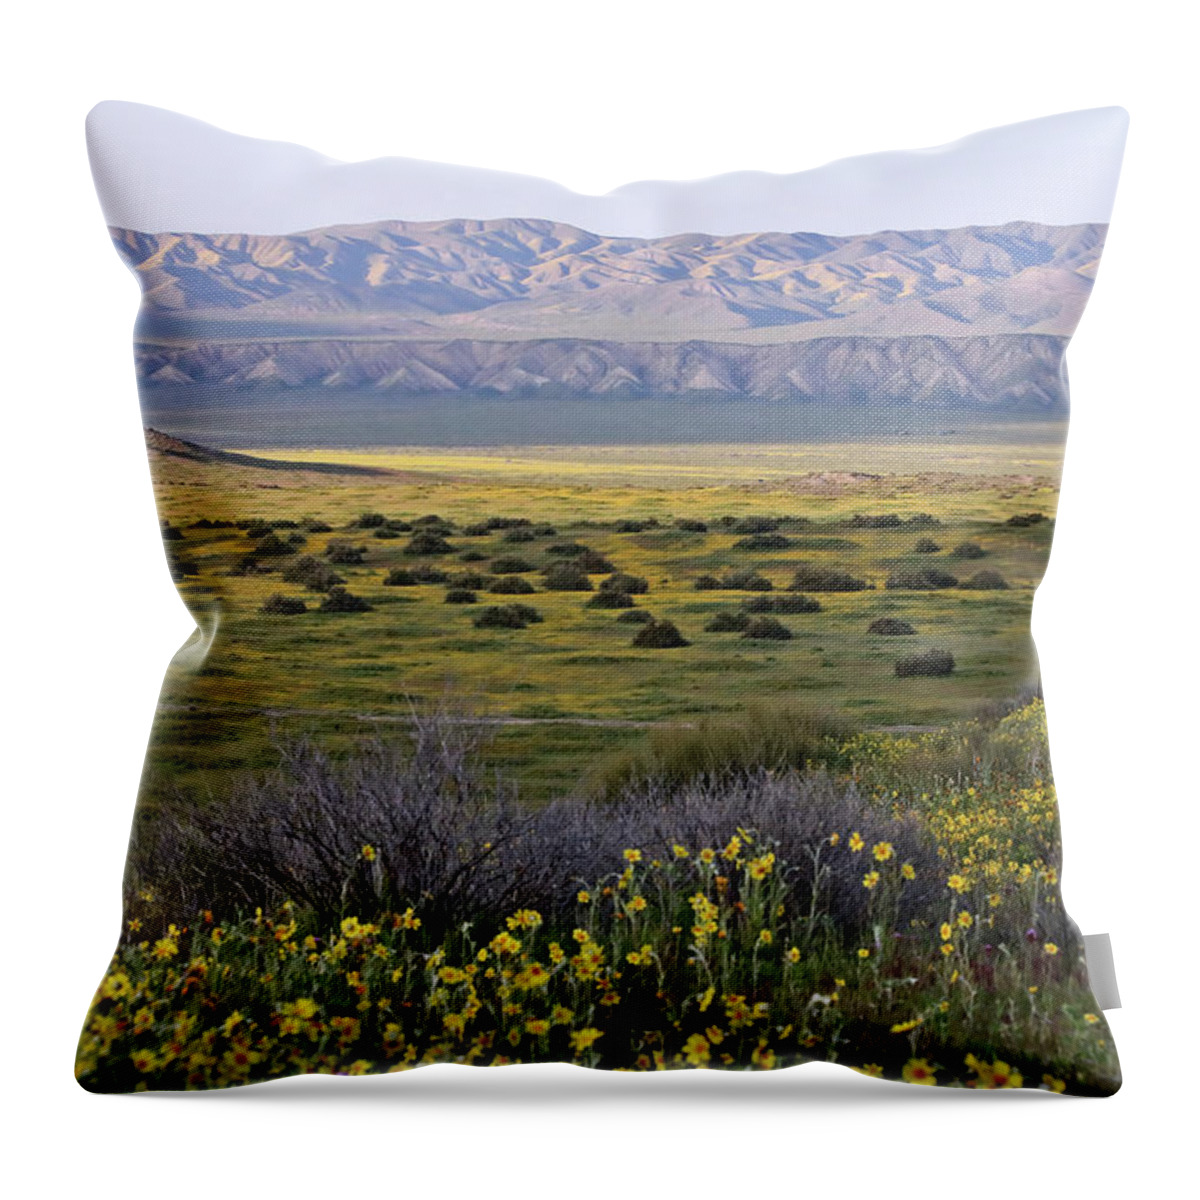  Throw Pillow featuring the photograph Carrizo Plain National Monument #1 by Carla Brennan